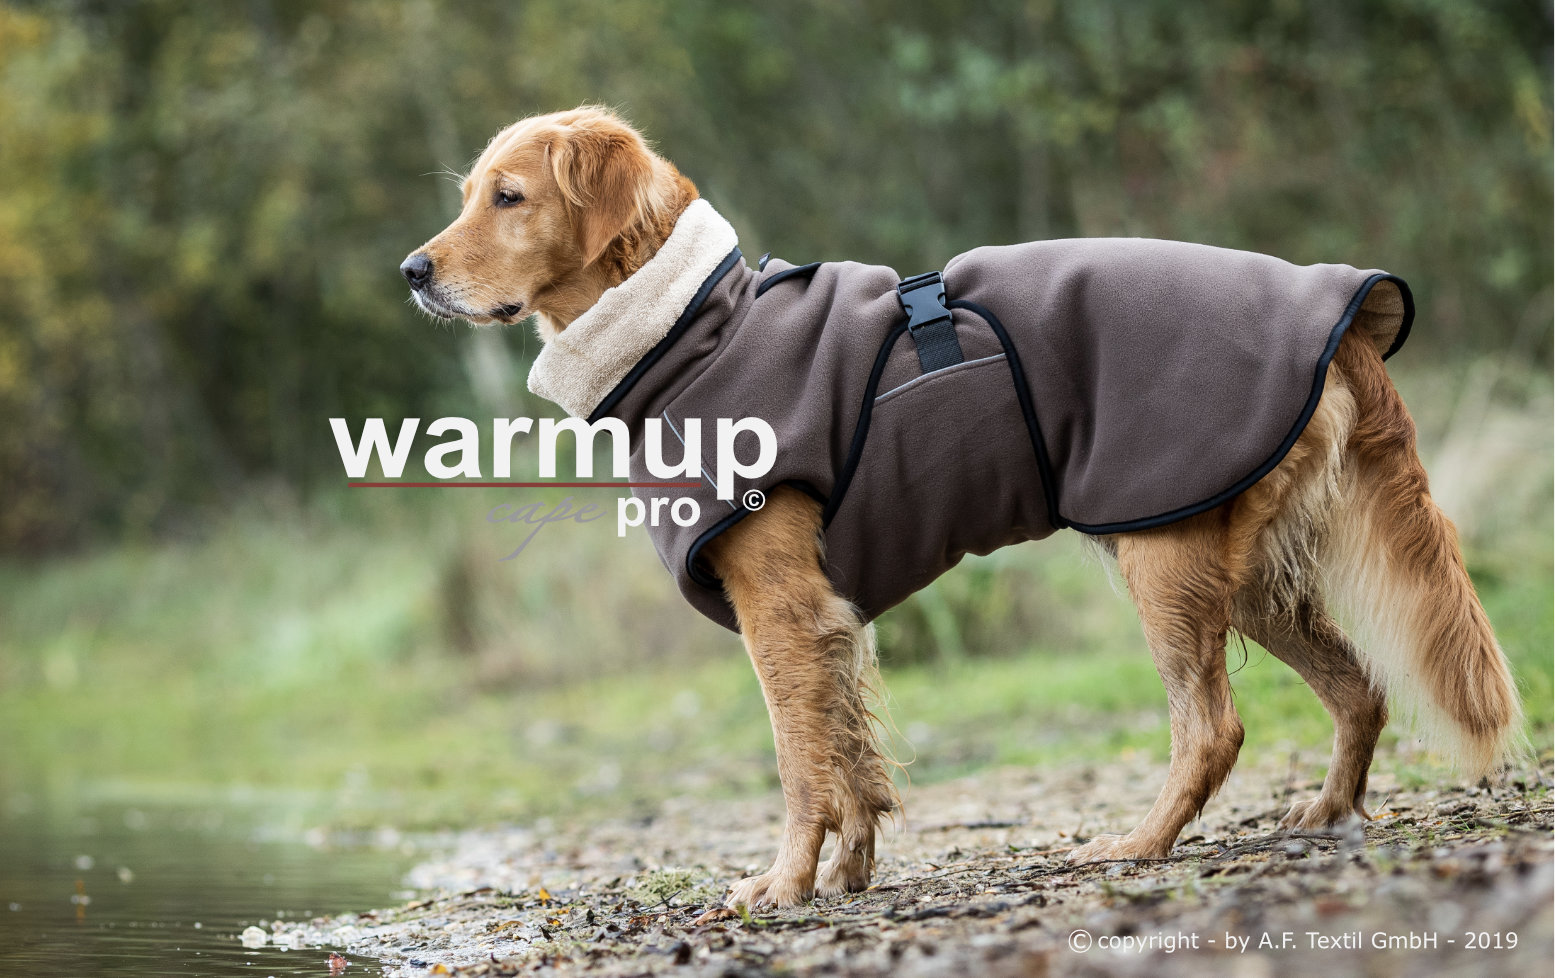 Warmup© cape pro mocca